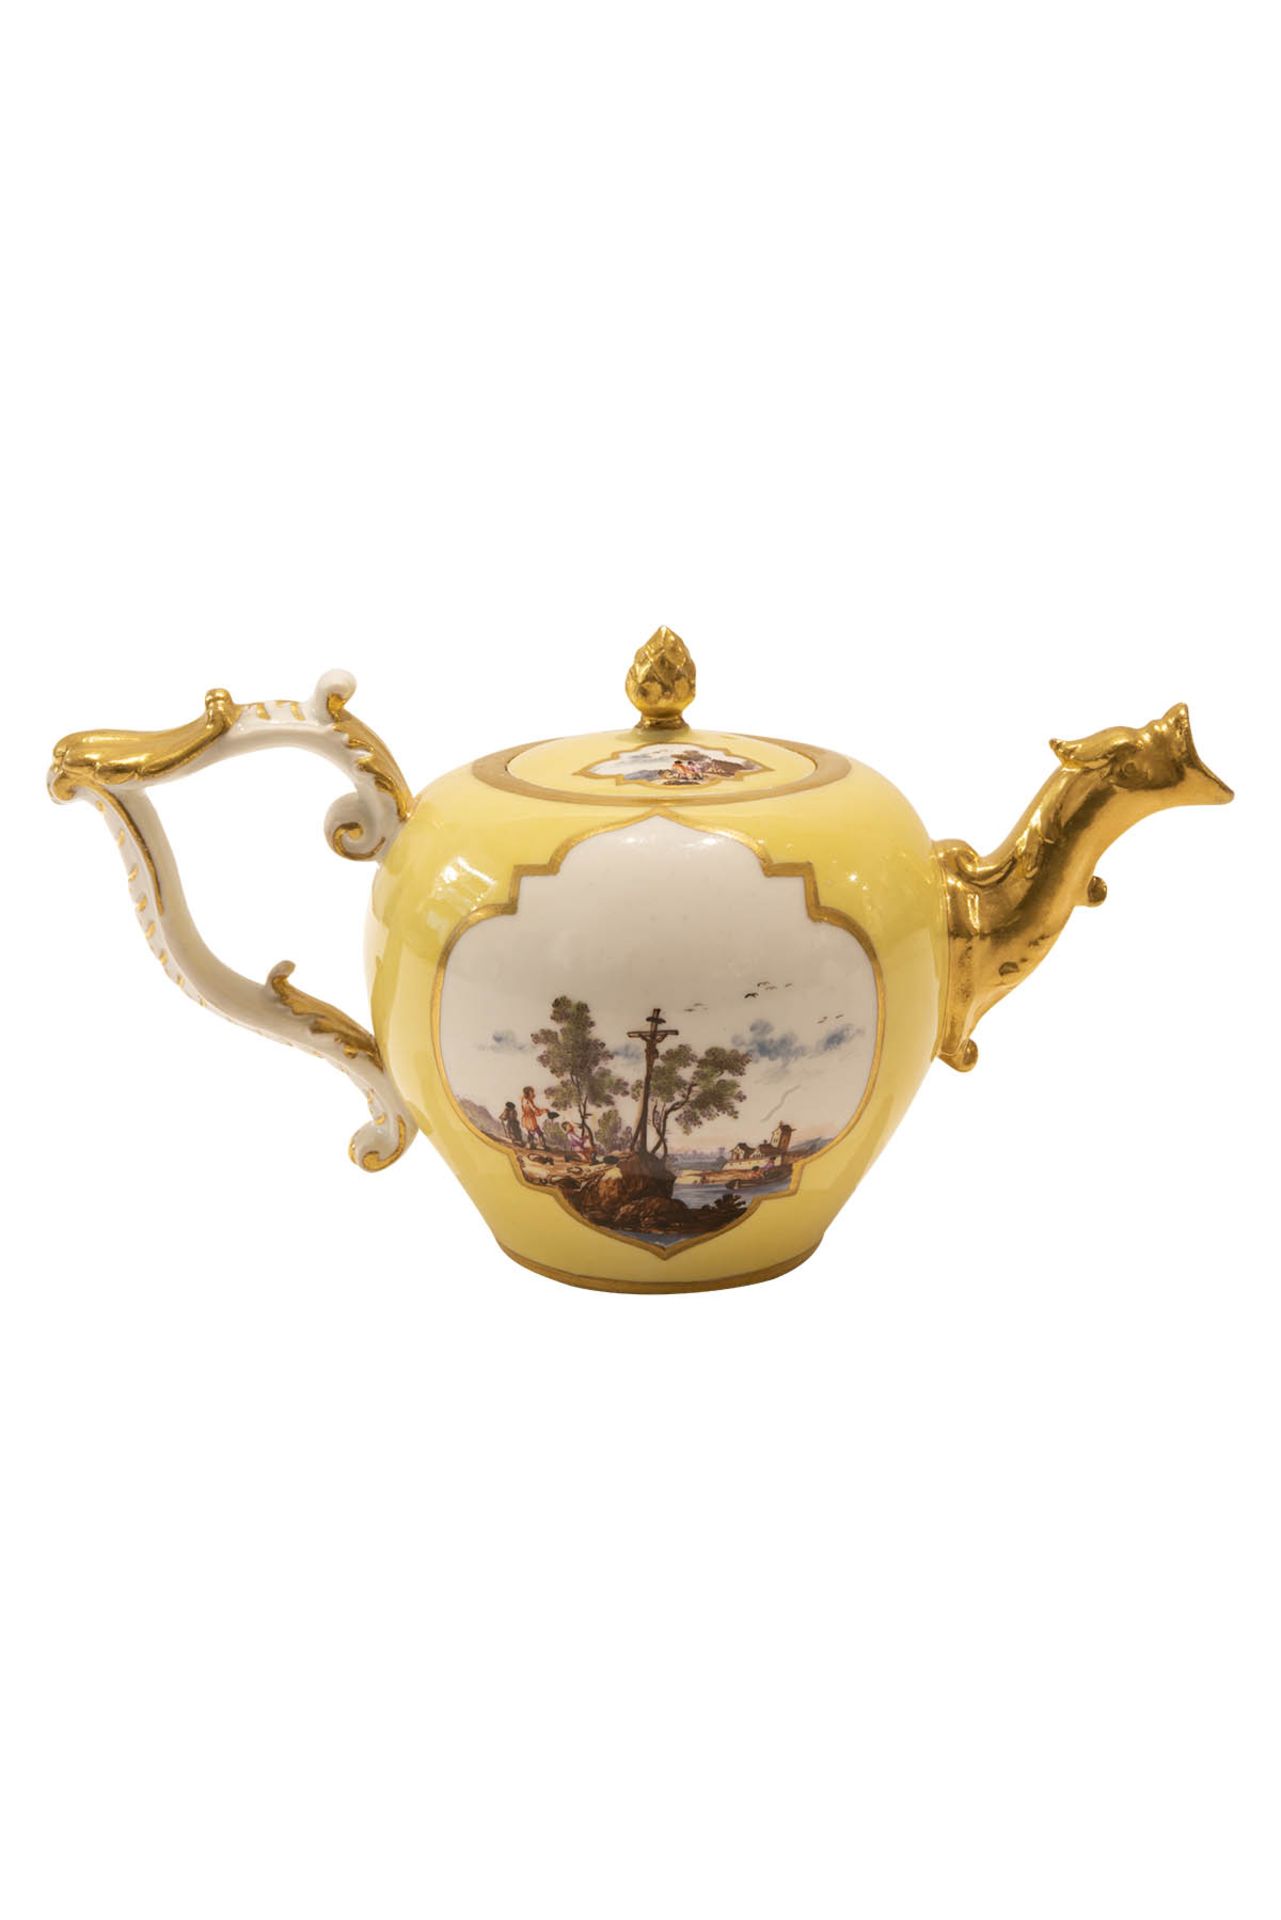 Teapot lemon yellow stock, Meissen 1740 - Image 2 of 6